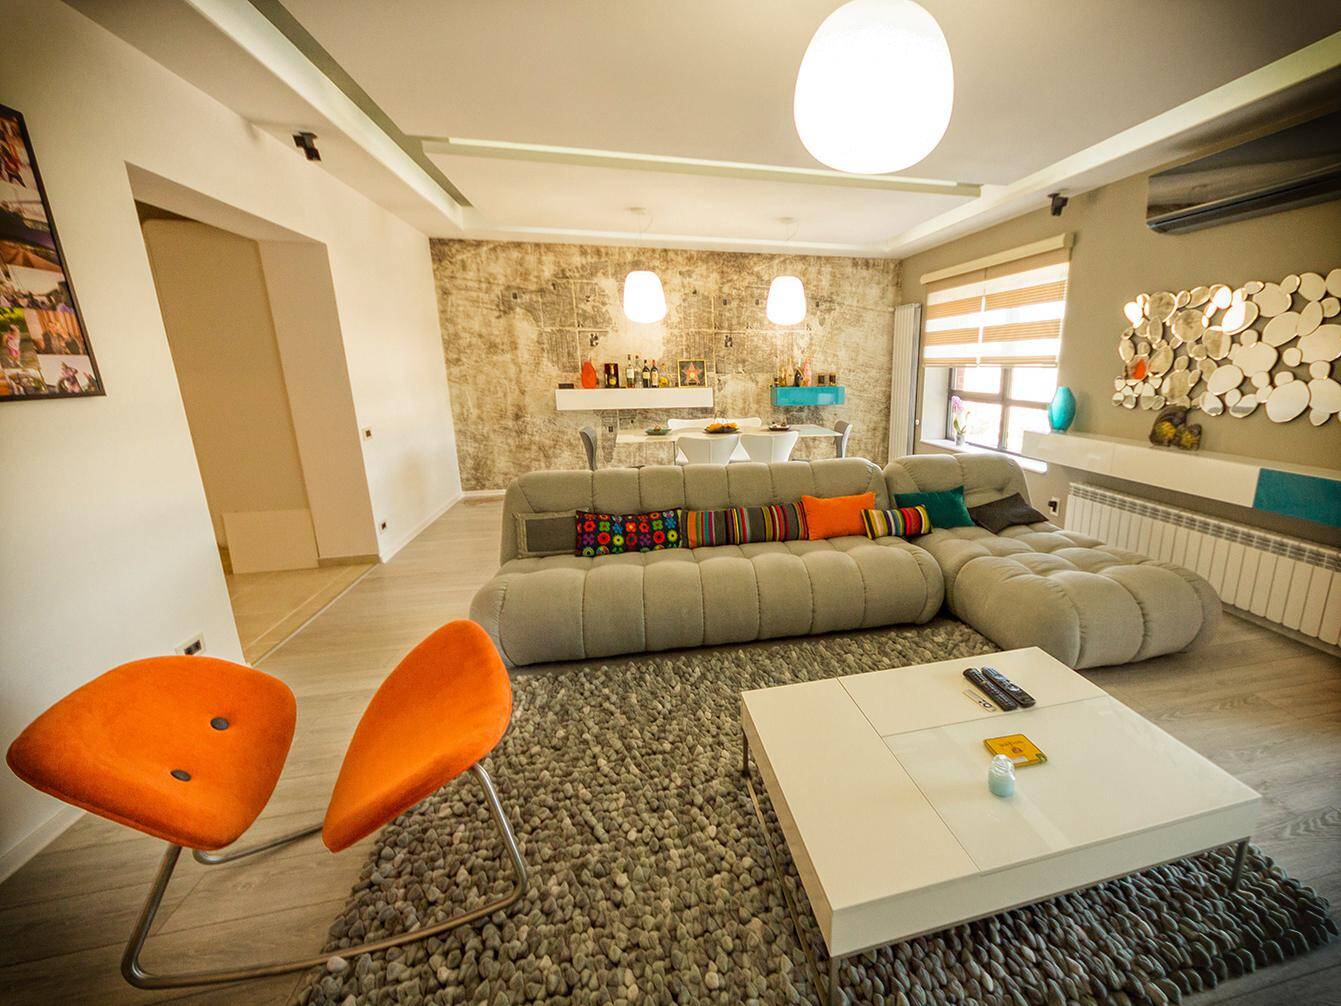 M apartment - Emerald Residence by Decorate it - HomeWorldDesign (6)